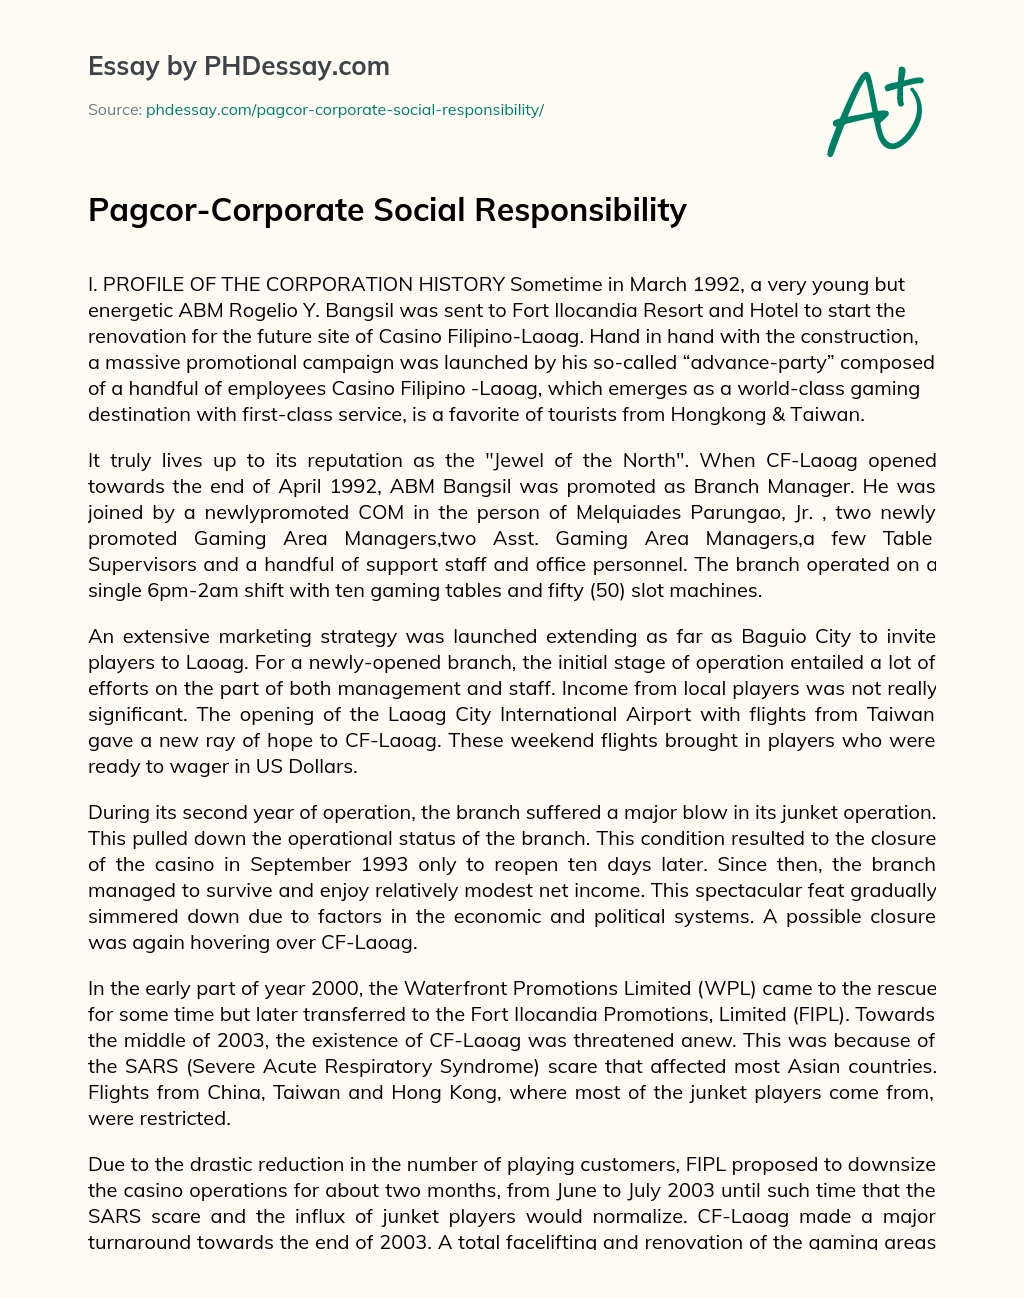 Pagcor-Corporate Social Responsibility essay